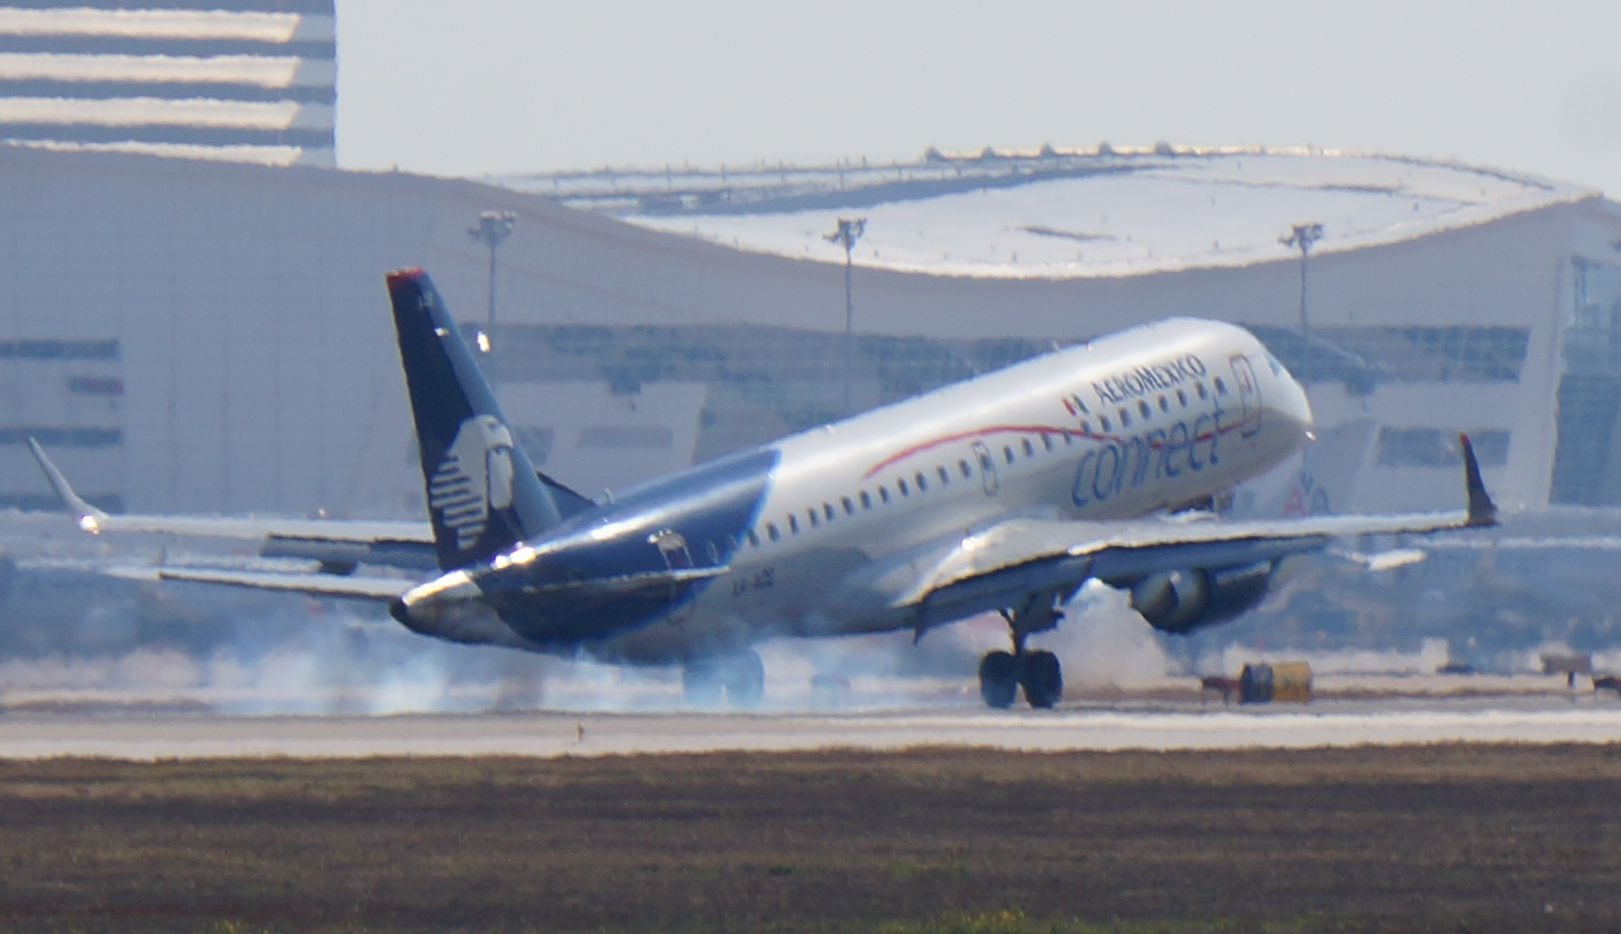 Delta Aeromexico Apply For Antitrust Immunity For Joint Venture